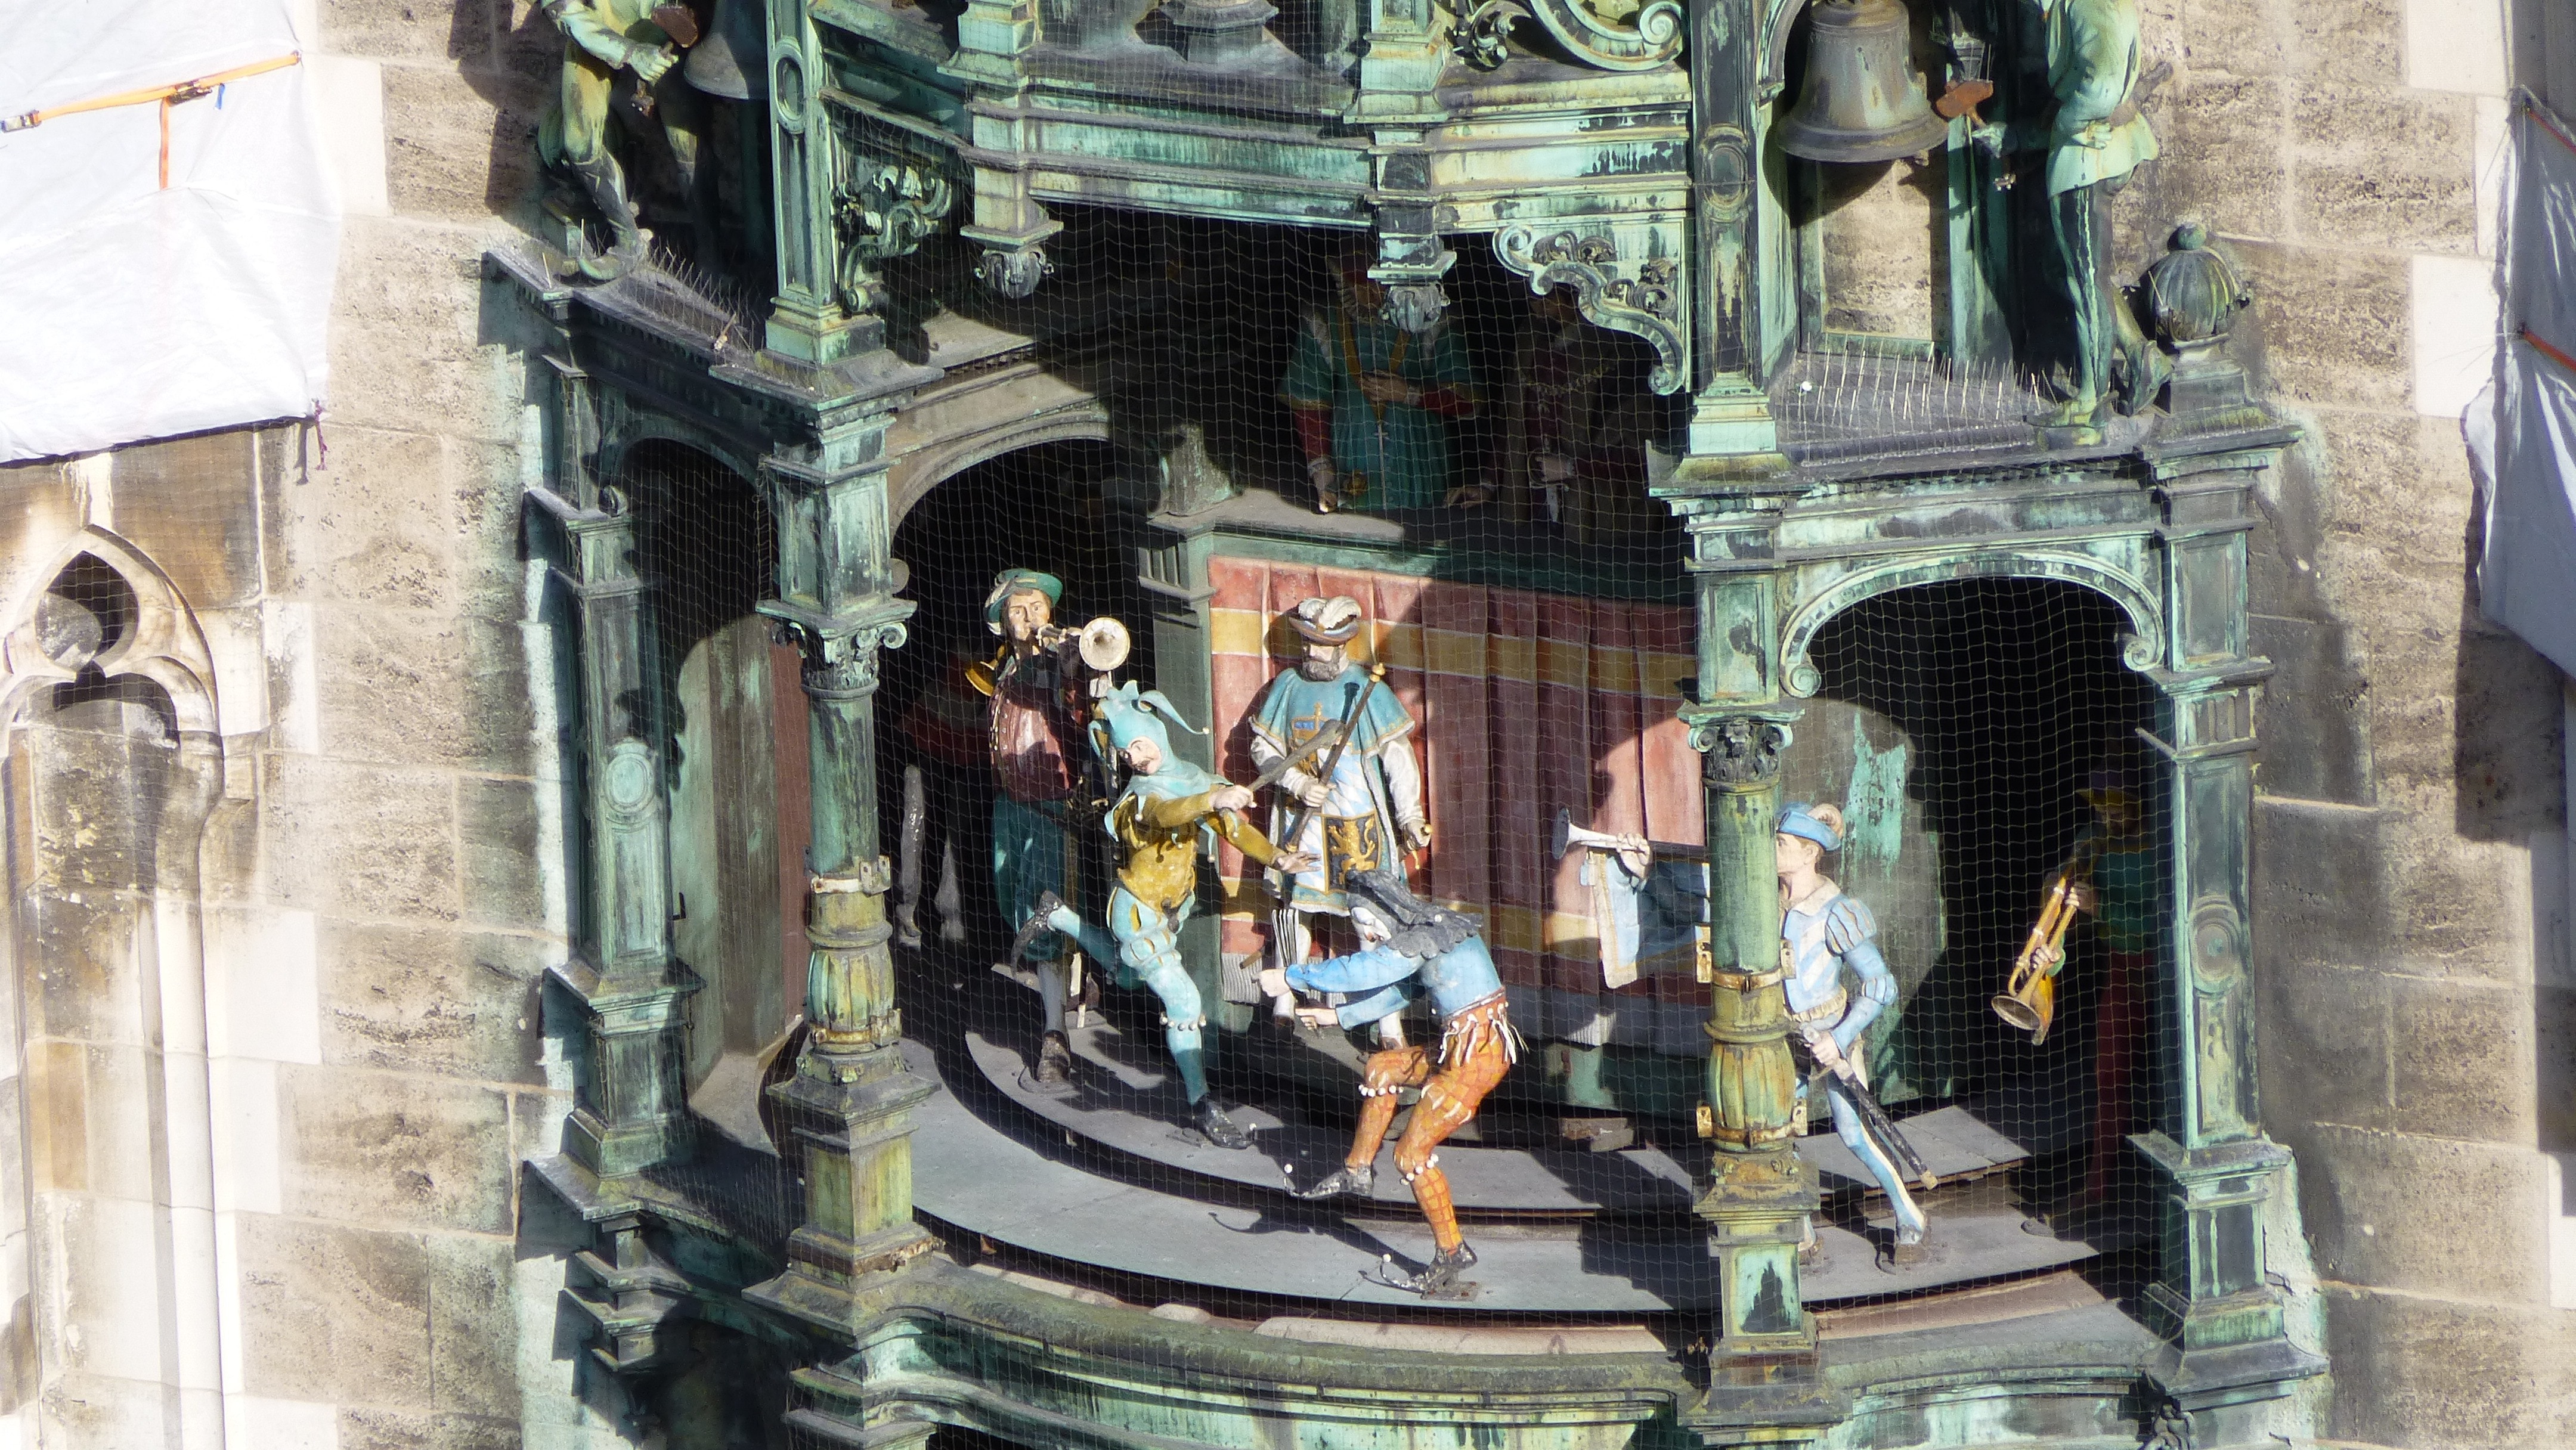 toddler's group of men figurine in castle